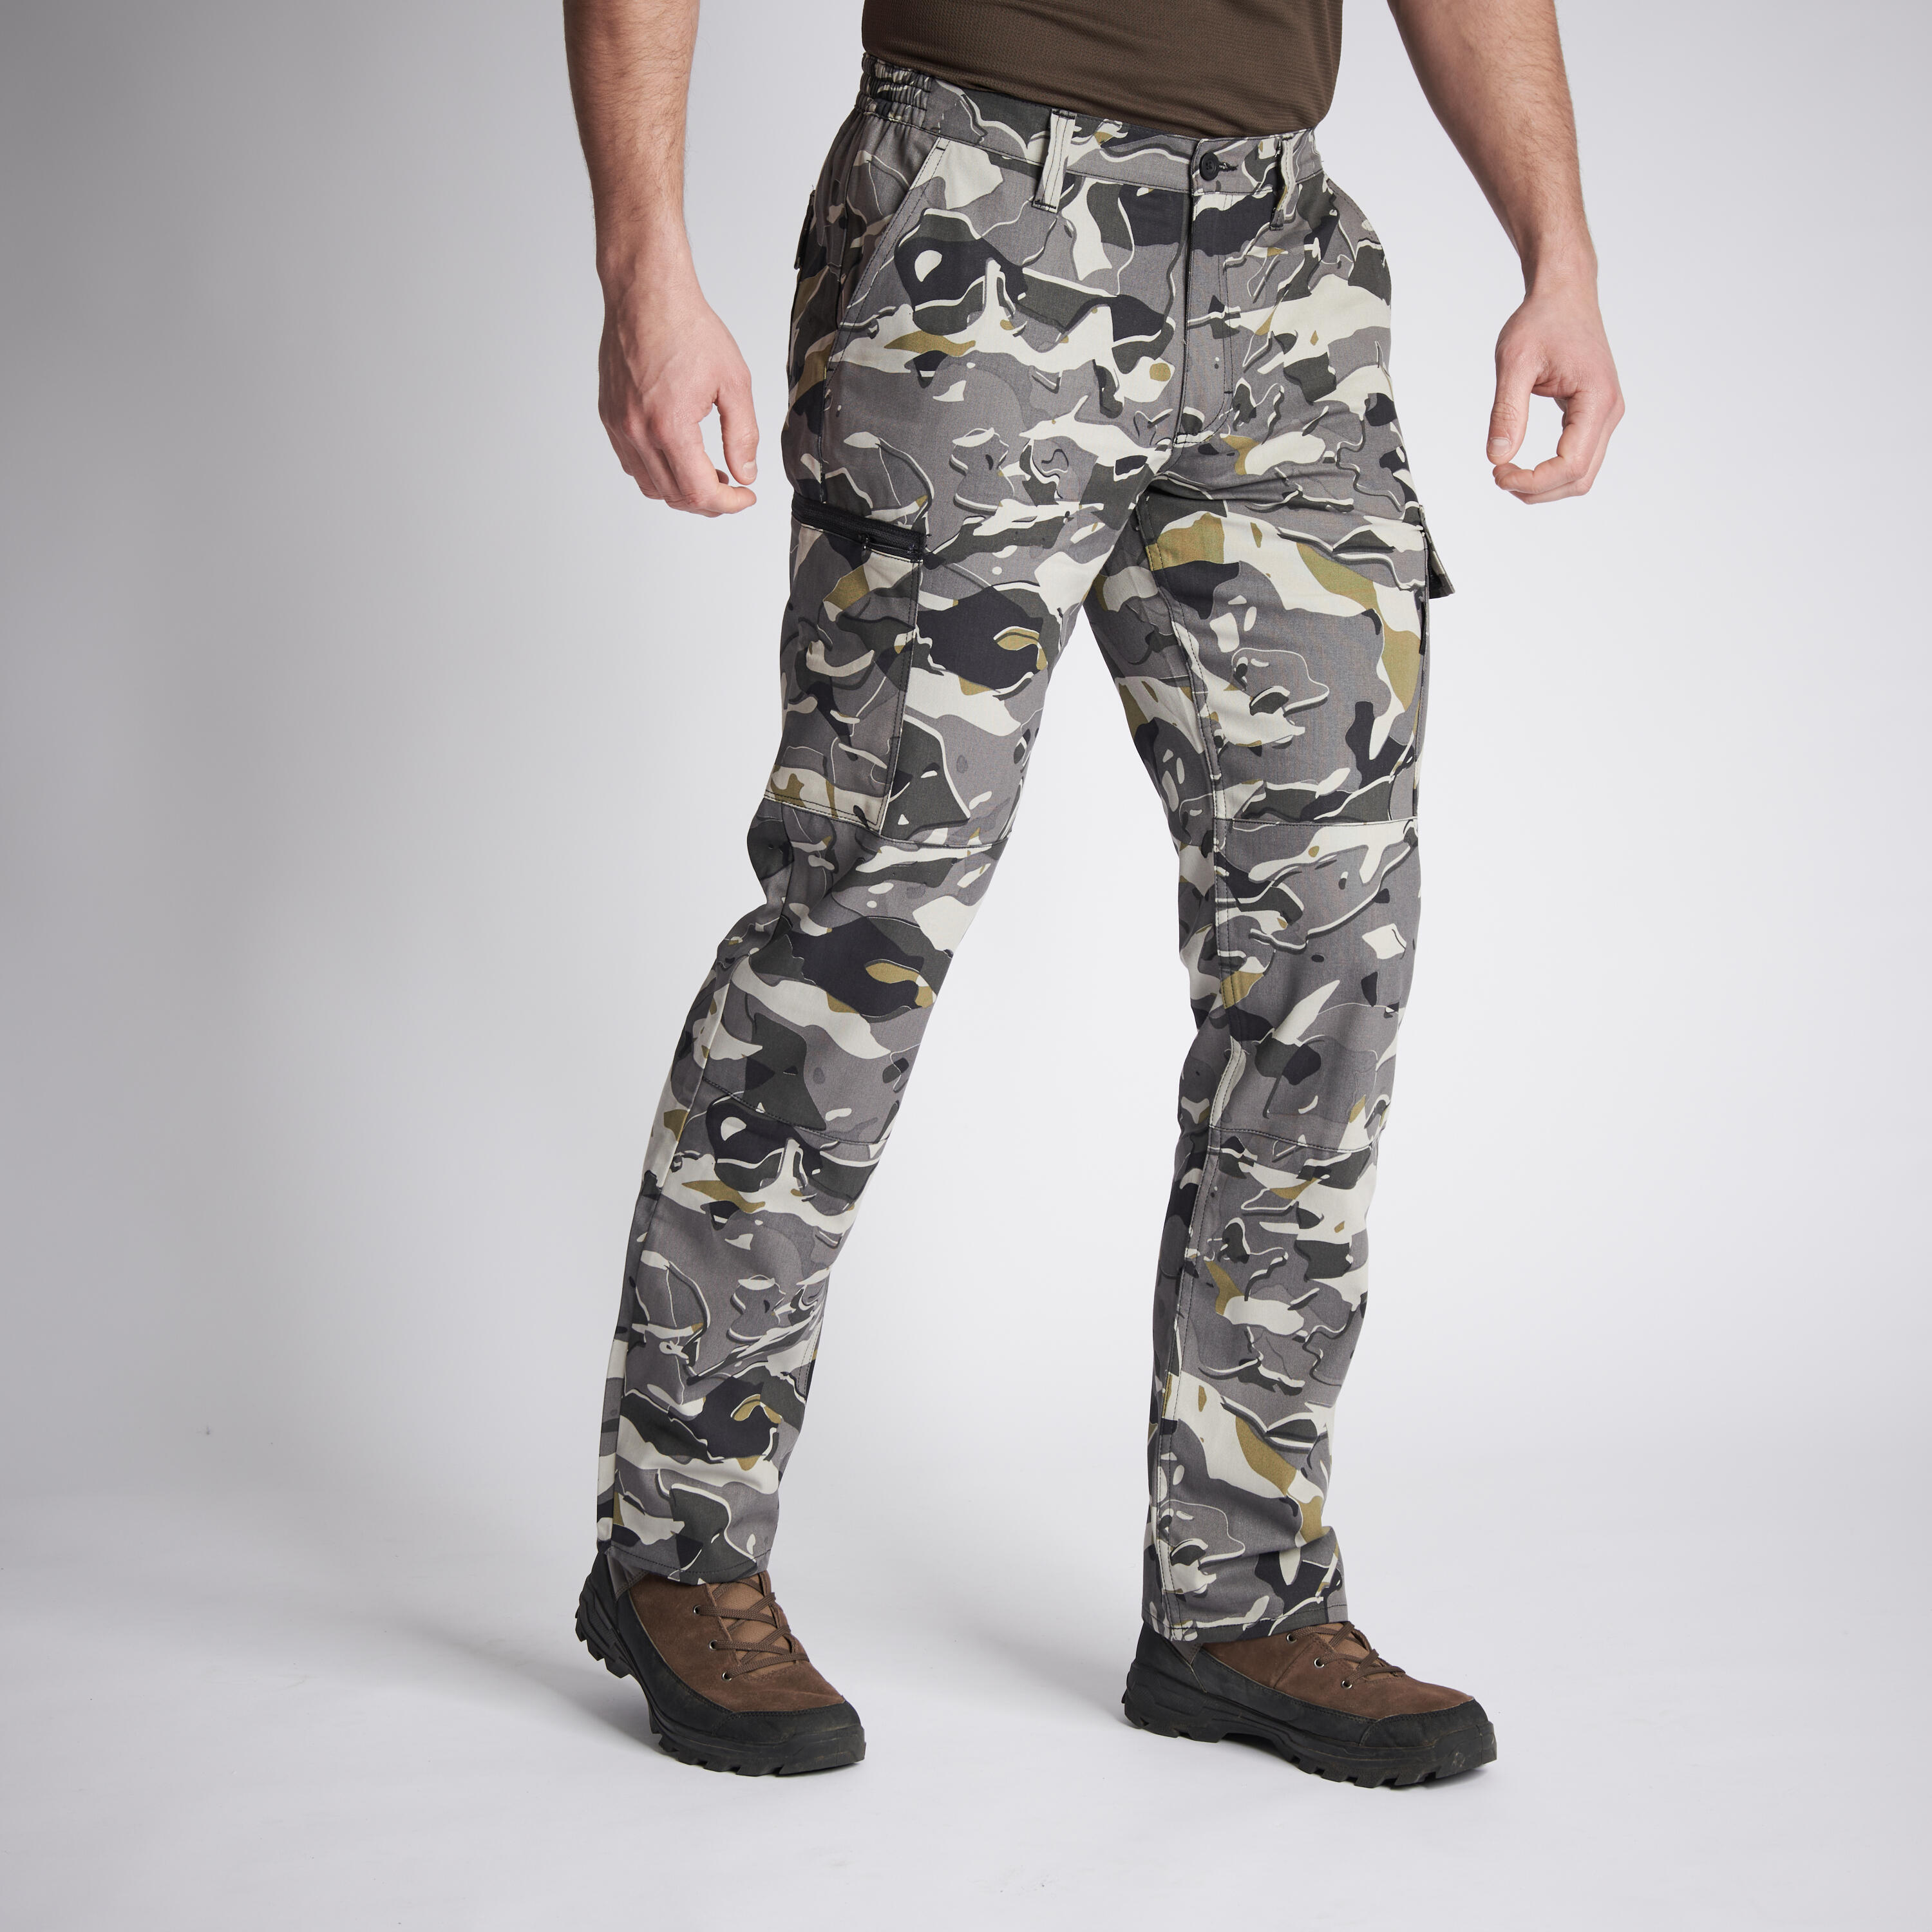 Buy t-base Desert Brown Cotton Stretch Camo Print Monochrome Cargo Pants  for Men online India